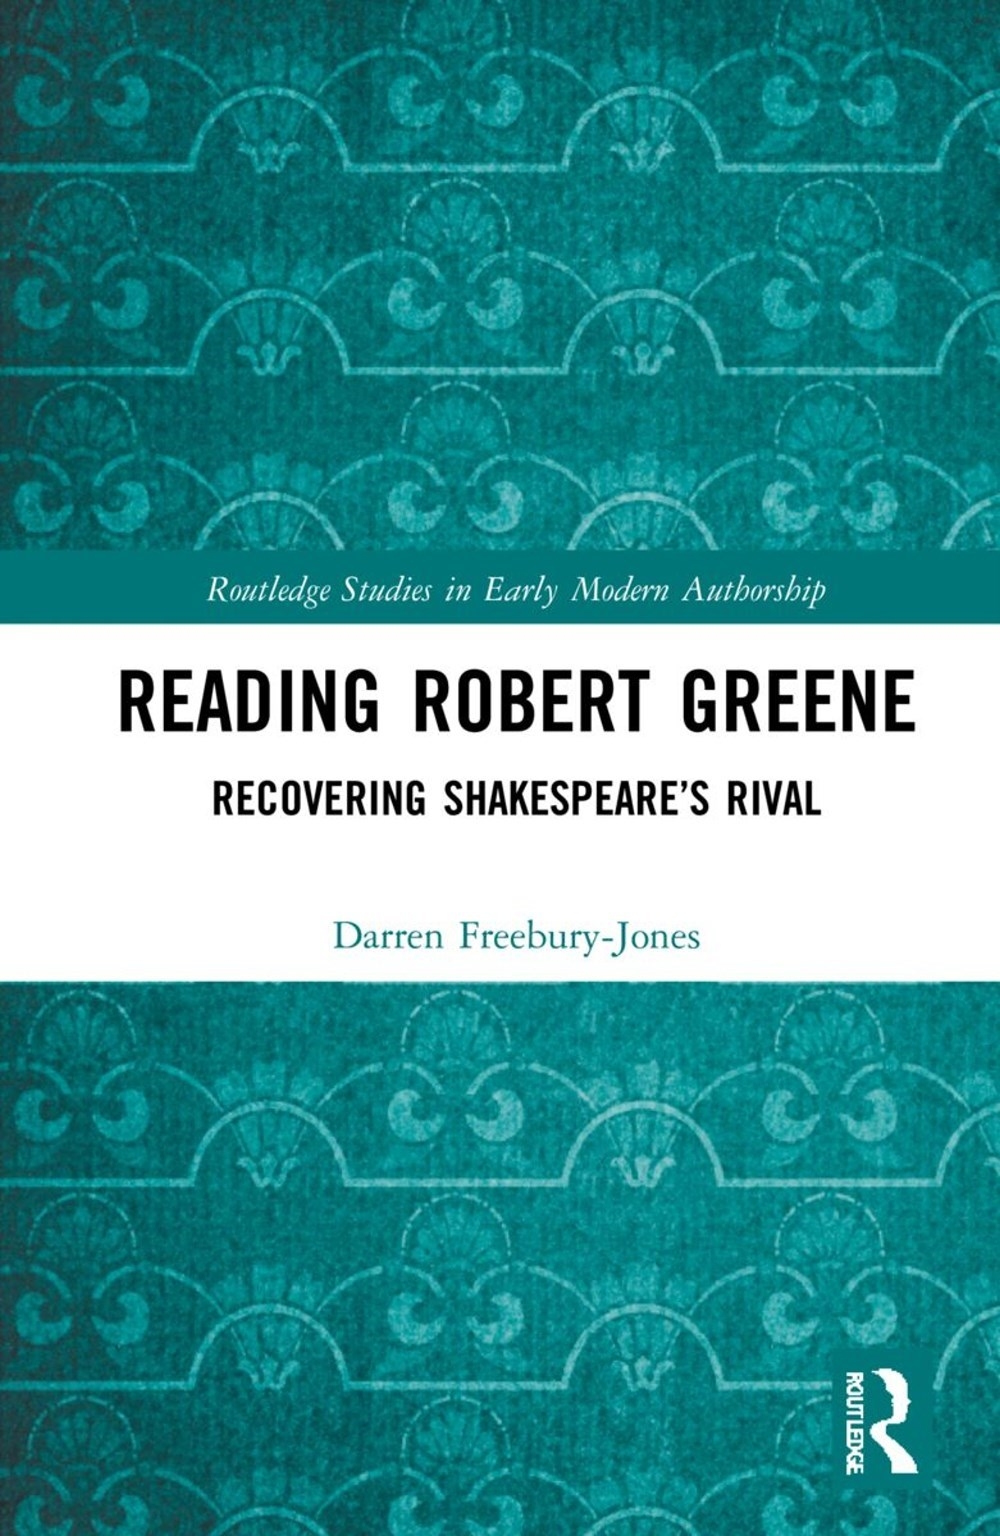 Reading Robert Greene: Recovering Shakespeare’s Rival